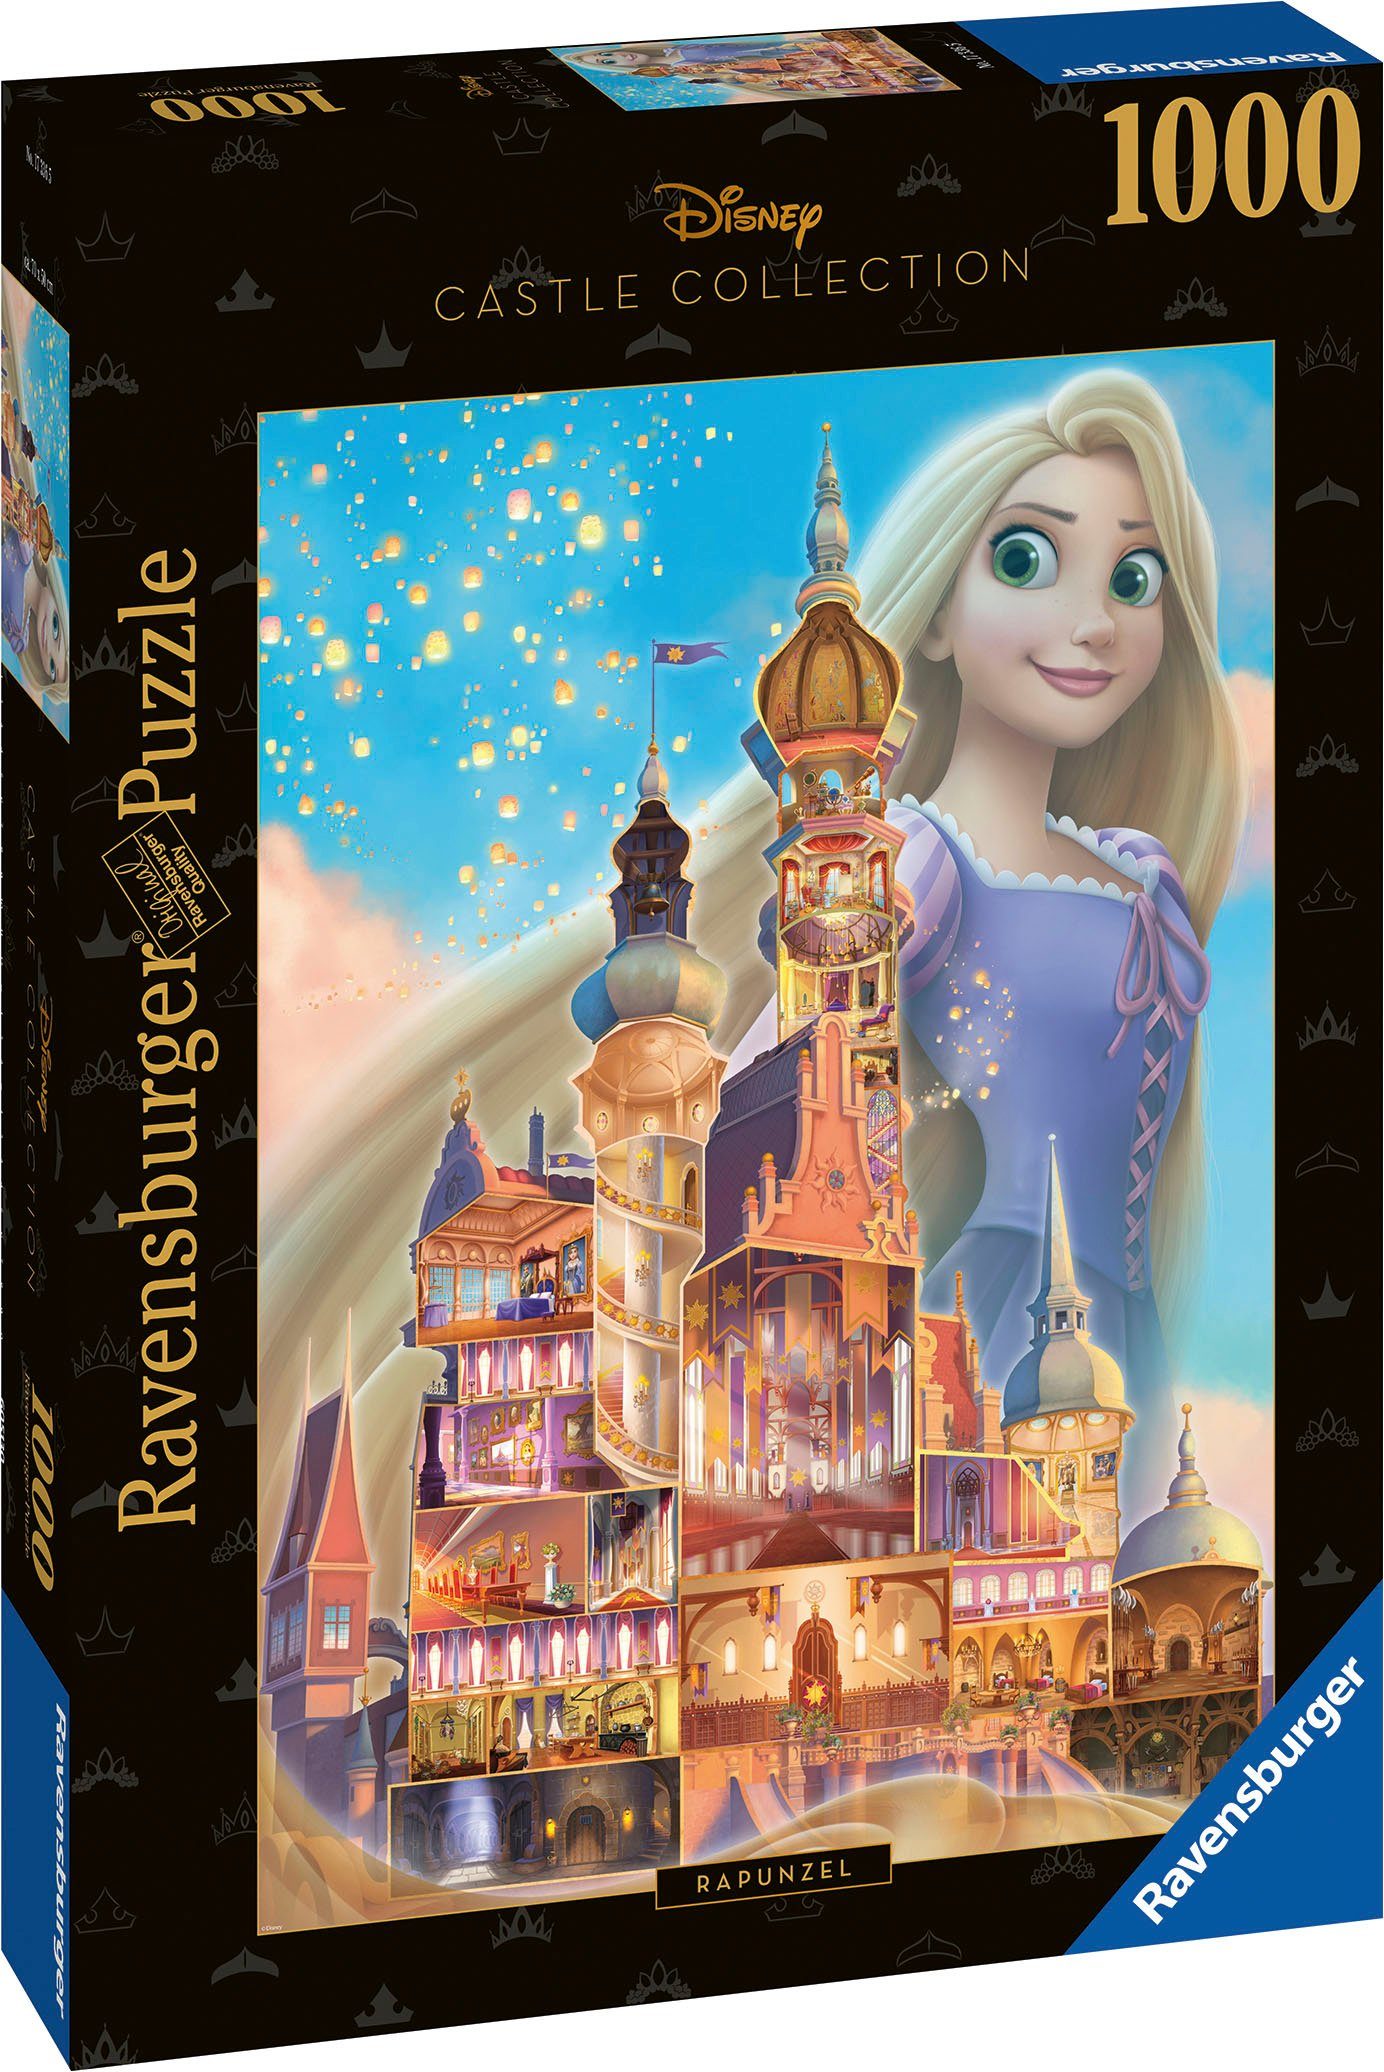 Ravensburger Puzzle Disney Castle Collection, Rapunzel, 1000 Puzzleteile,  Made in Germany, Softclick Technologie ermöglicht einfaches Puzzeln